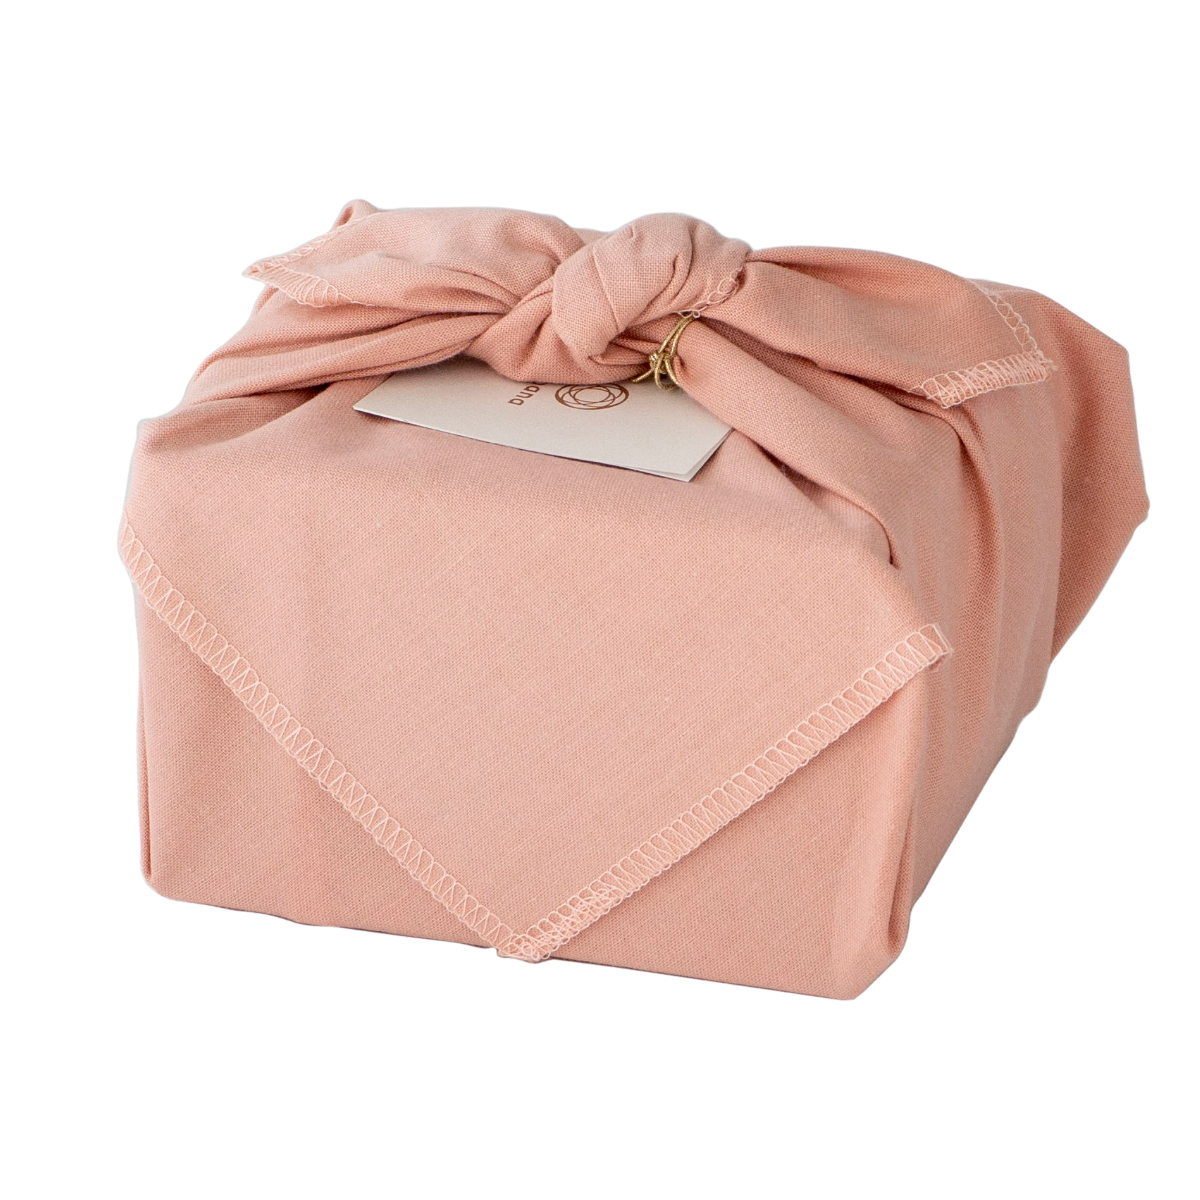 Cohana 手まりの六角小箱 お裁縫セット 日本製 コハナ 裁縫道具 裁縫 